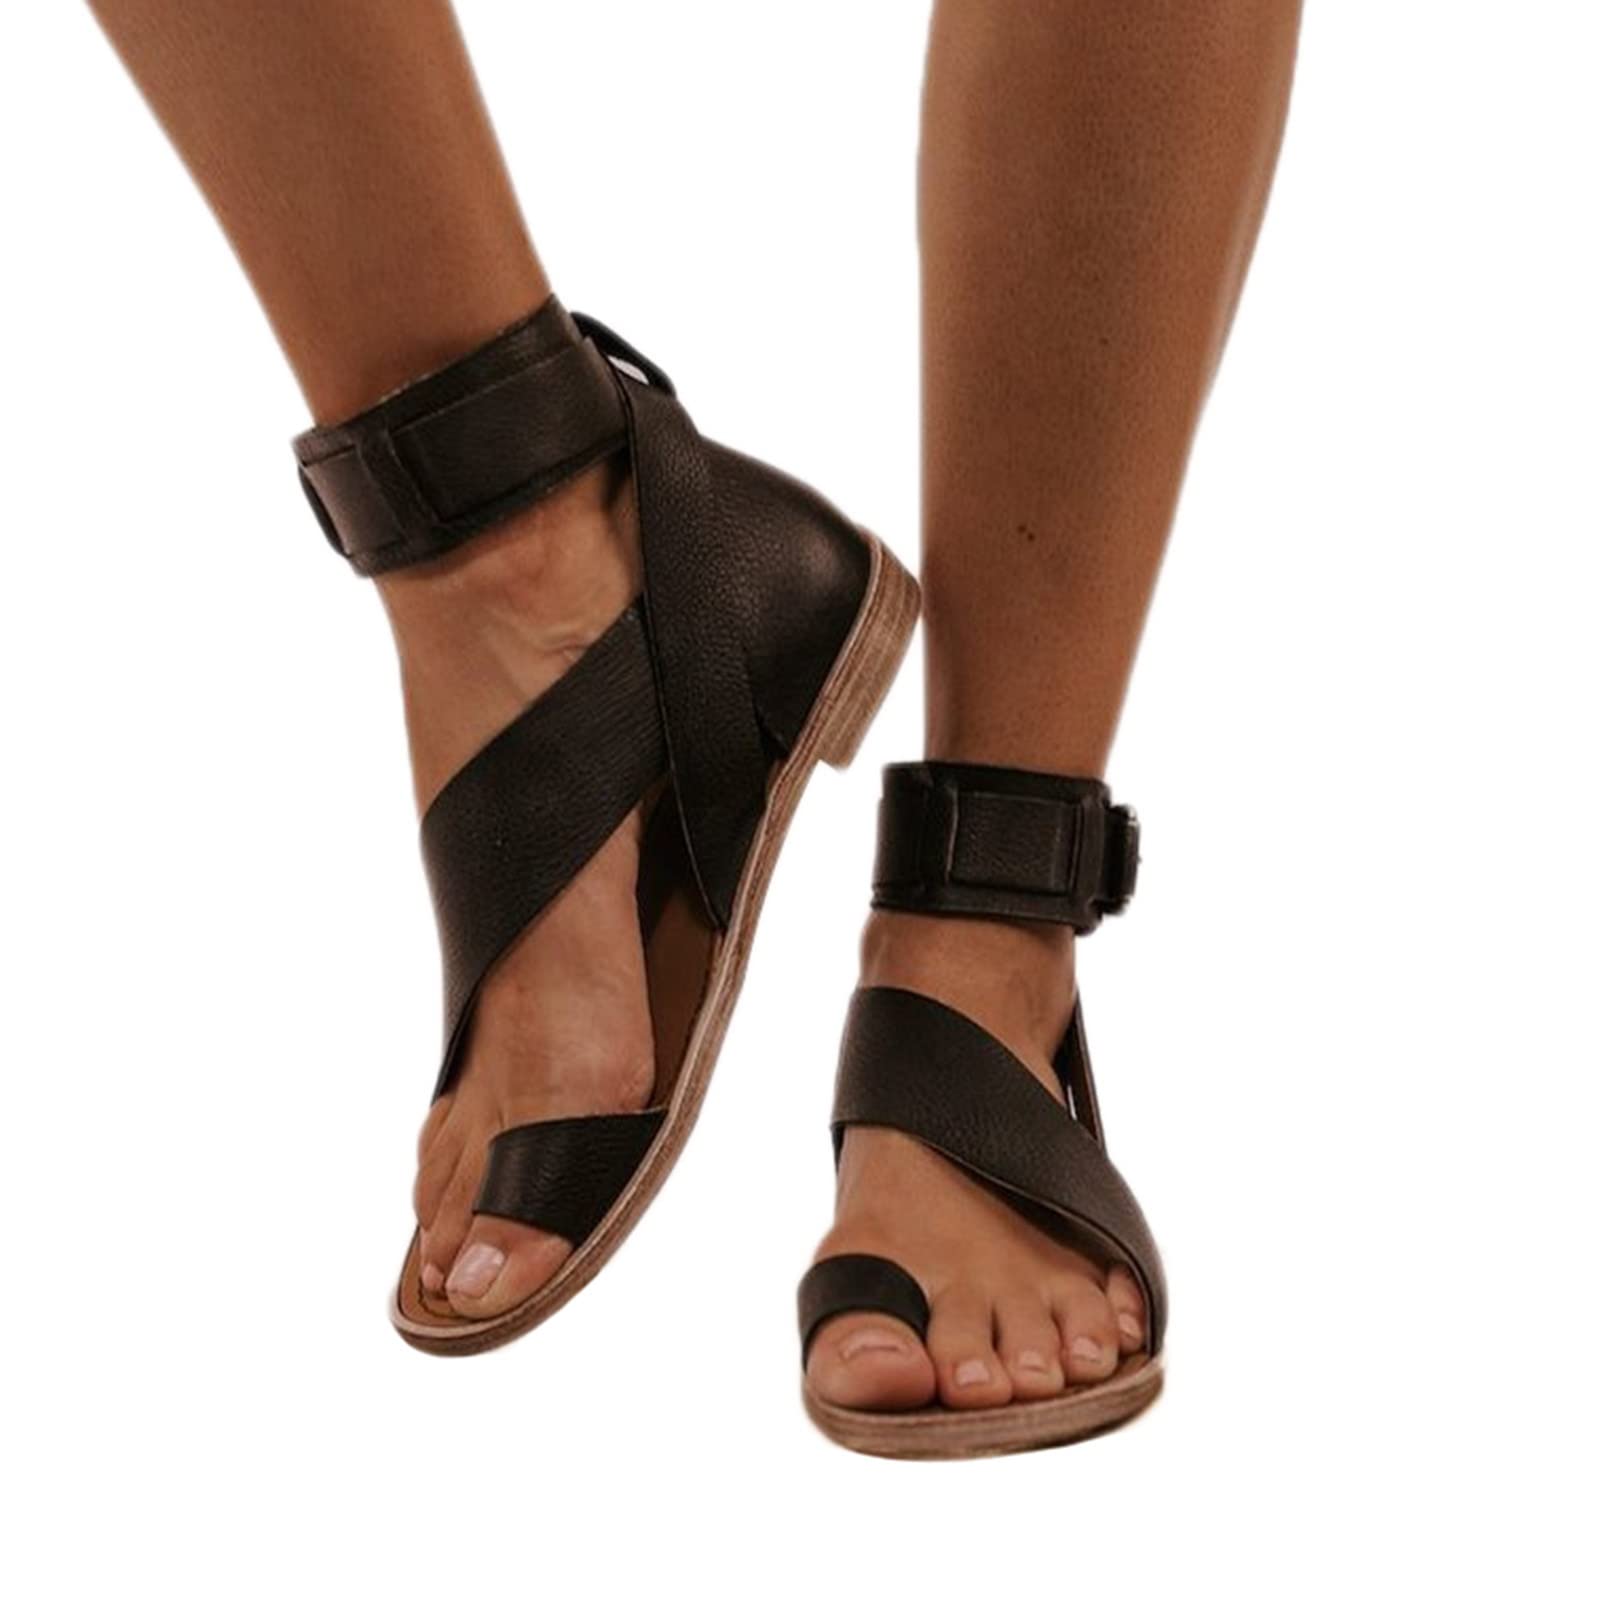 Orthopedic Sandals For Bunion Toe Treatment - Inspire Uplift